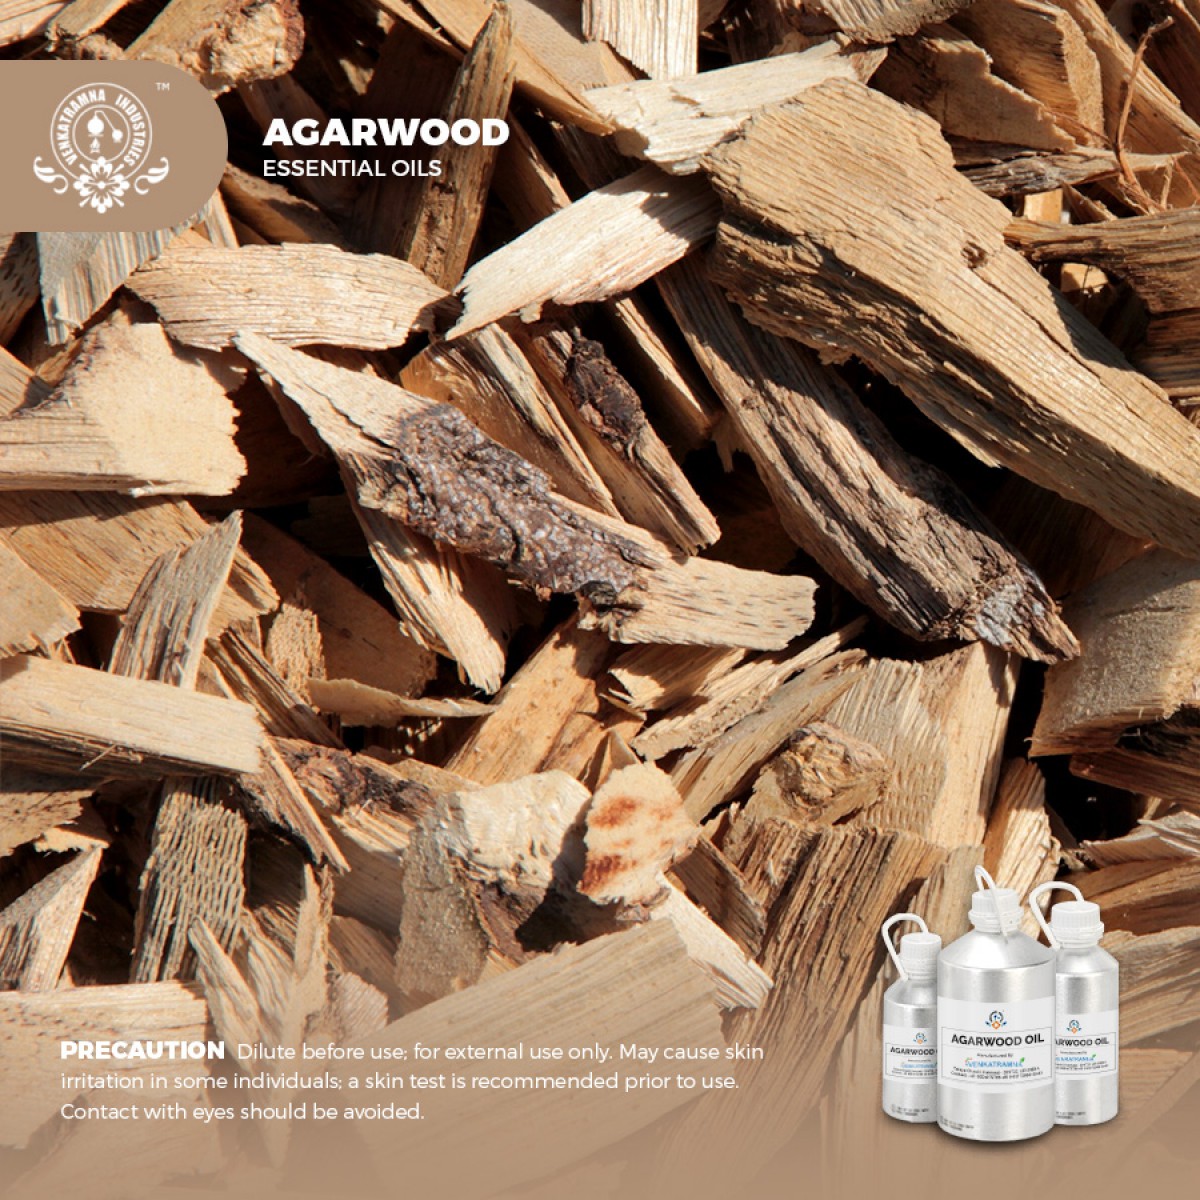 Agarwood Essential Oil Organic - Oudh Aquilaria malaccensis India